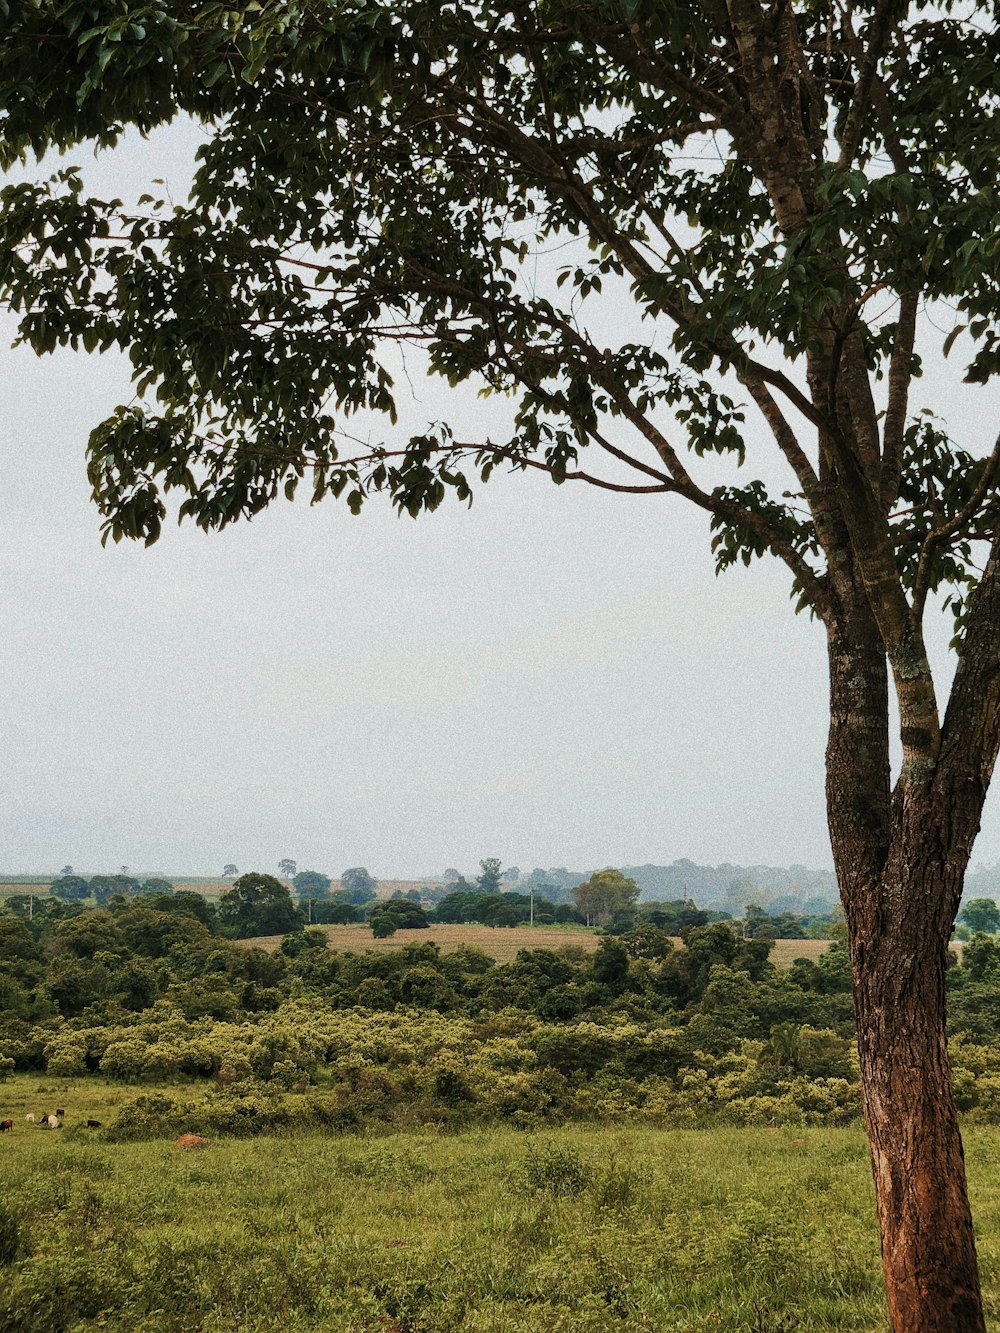 a giraffe standing next to a tree on a lush green field